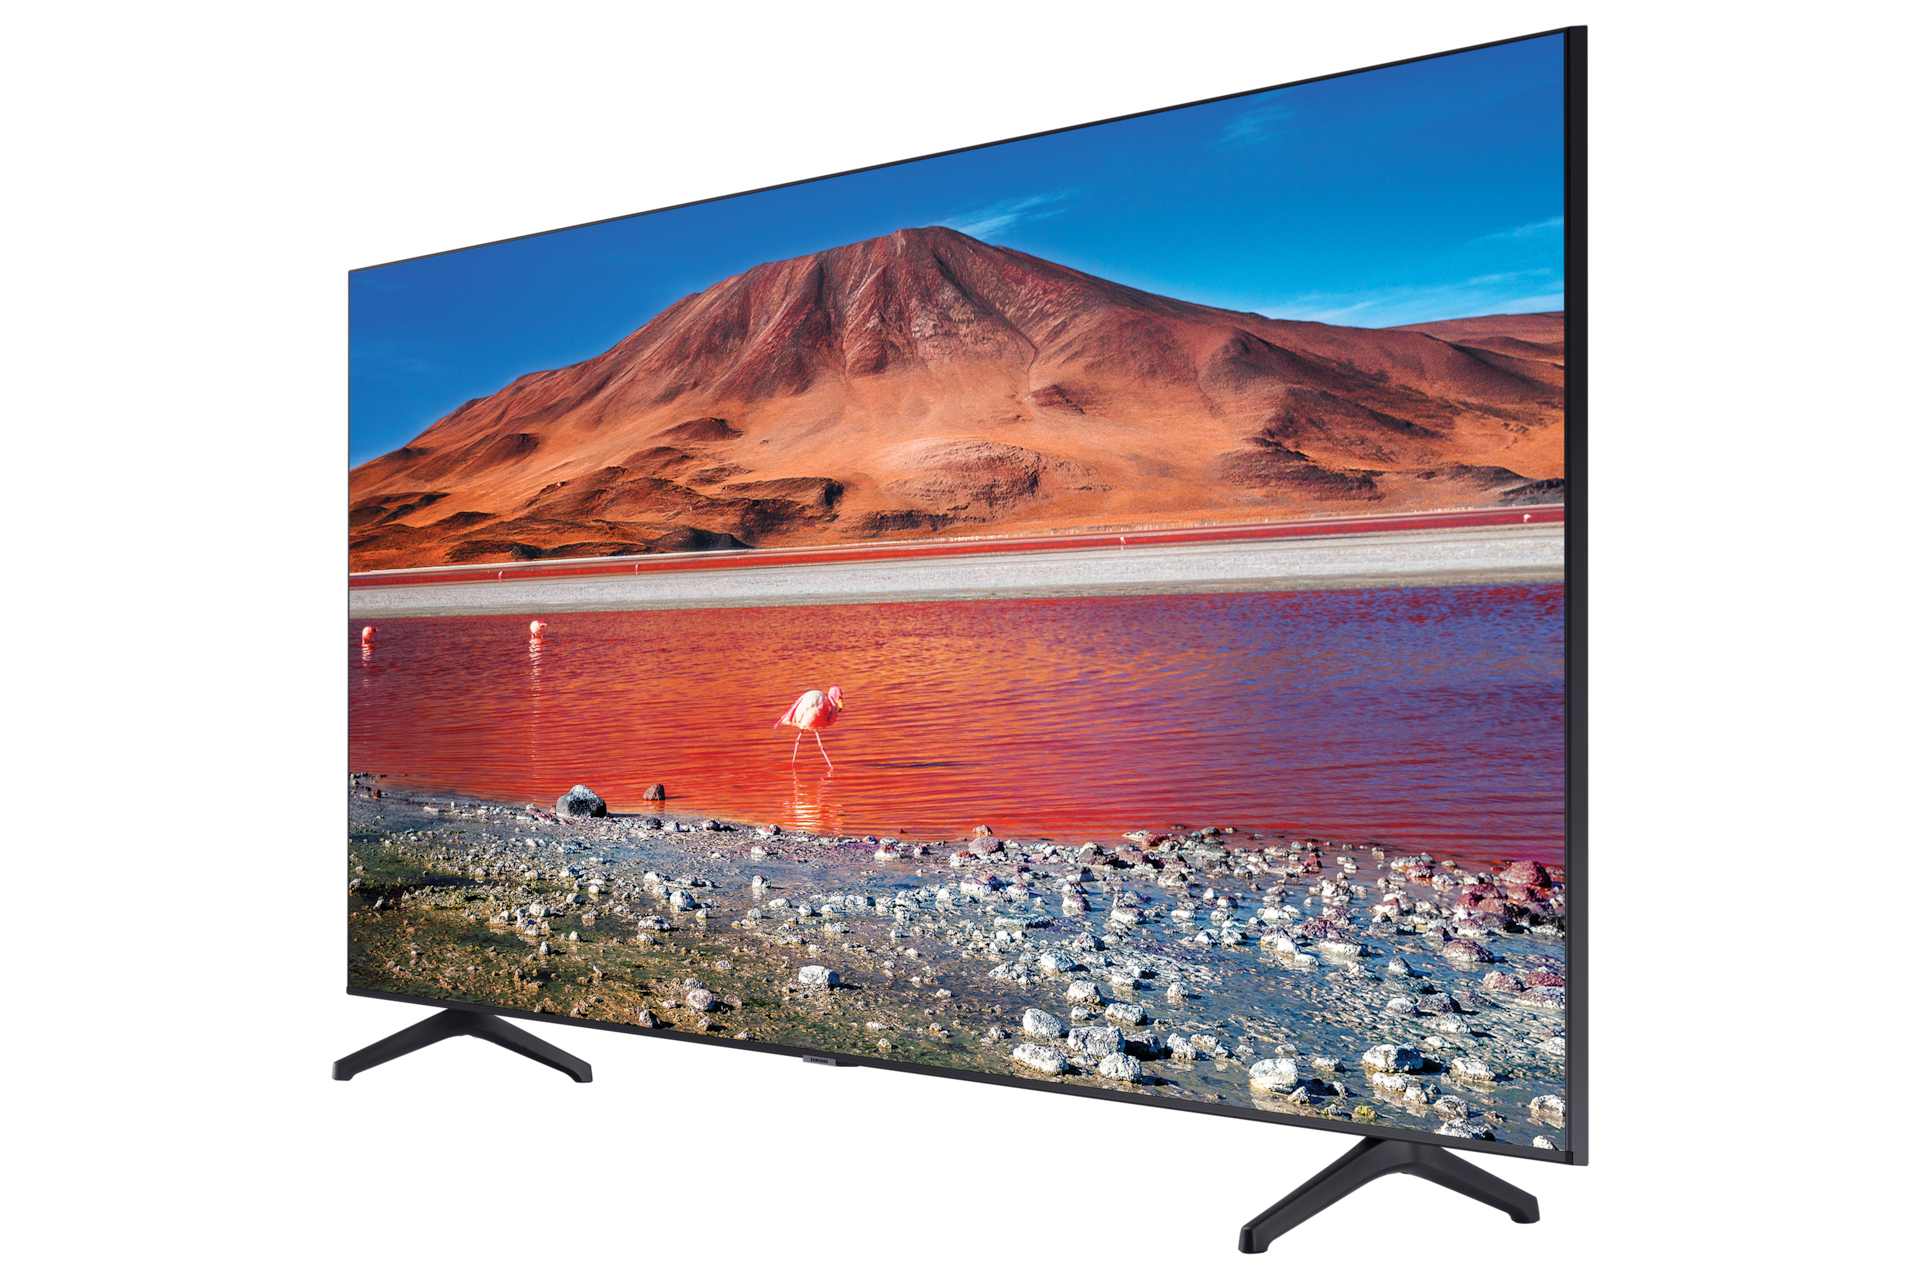 40+ Samsung series 7 nu7090 50 uhd 4k led smart tv ideas in 2021 